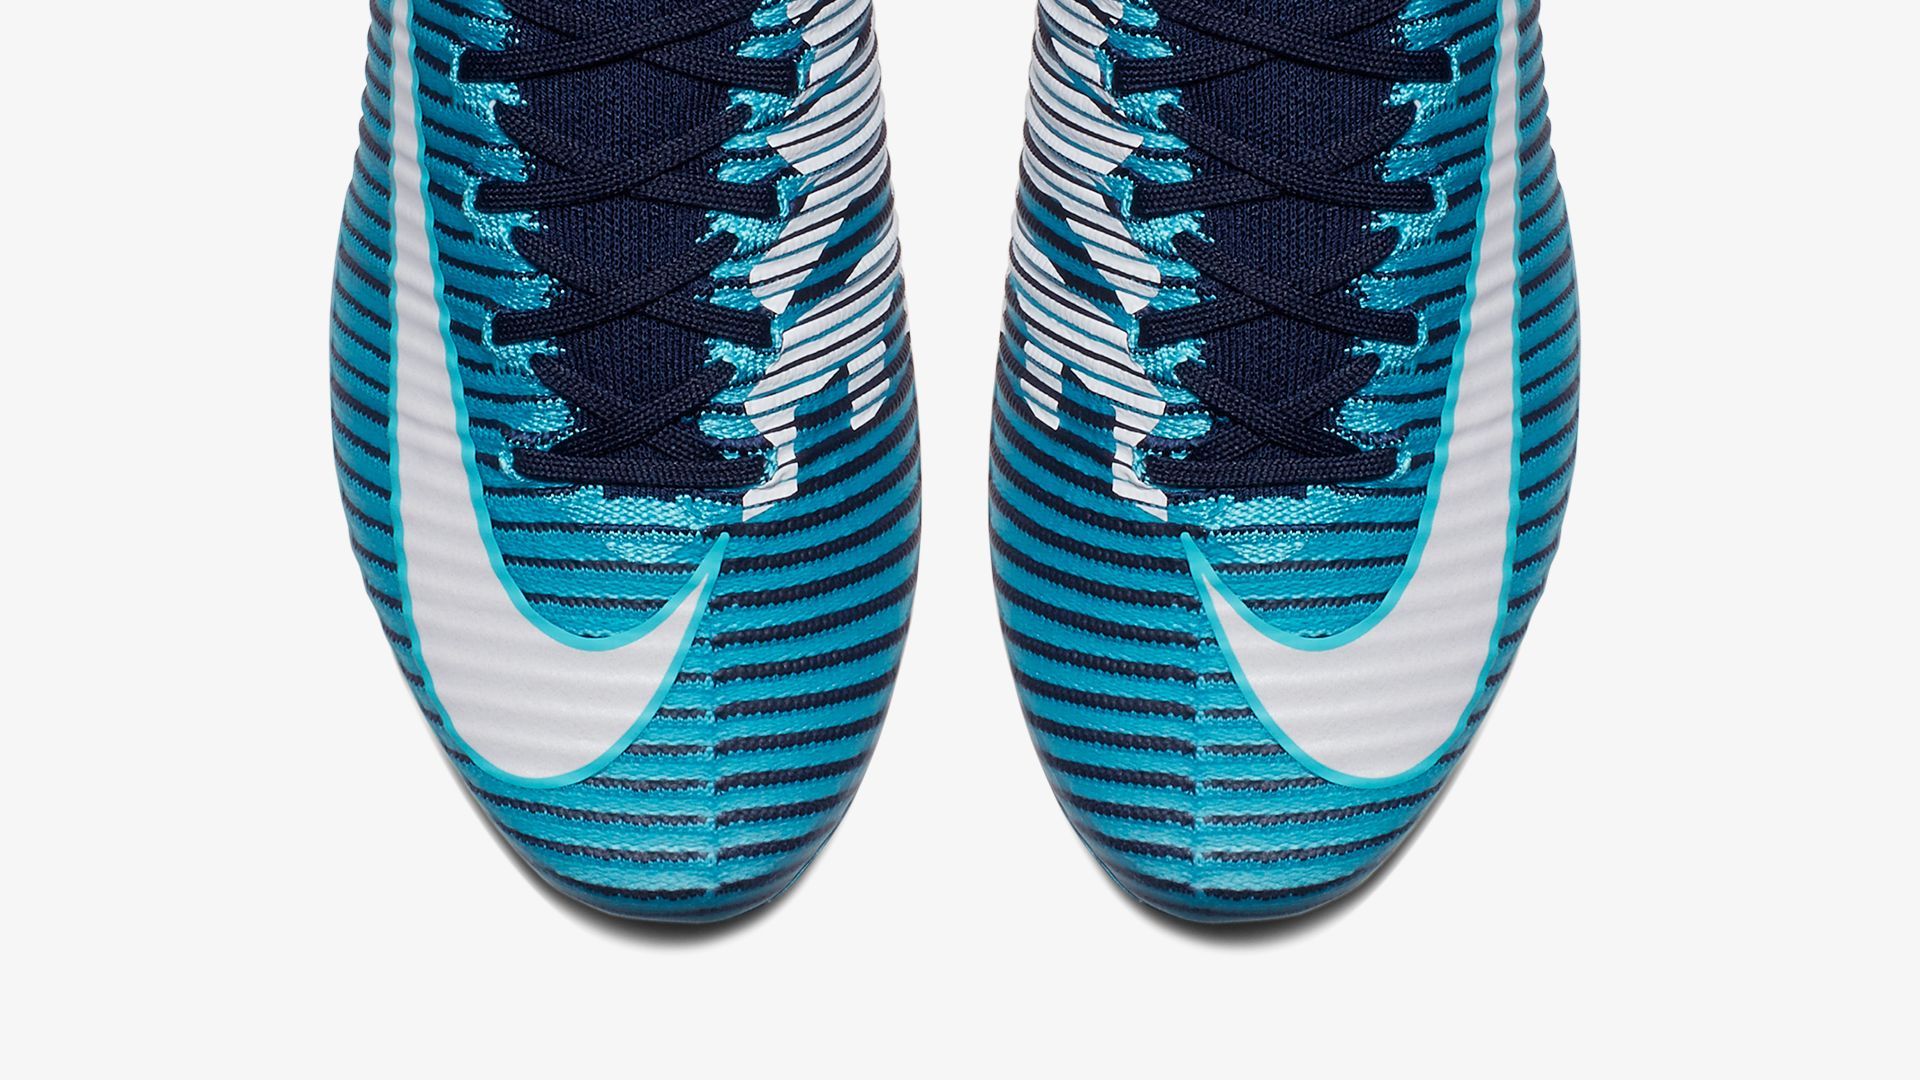 Nike Magista Obra II FG Soccer Cleats Size 10.5 Mens Black